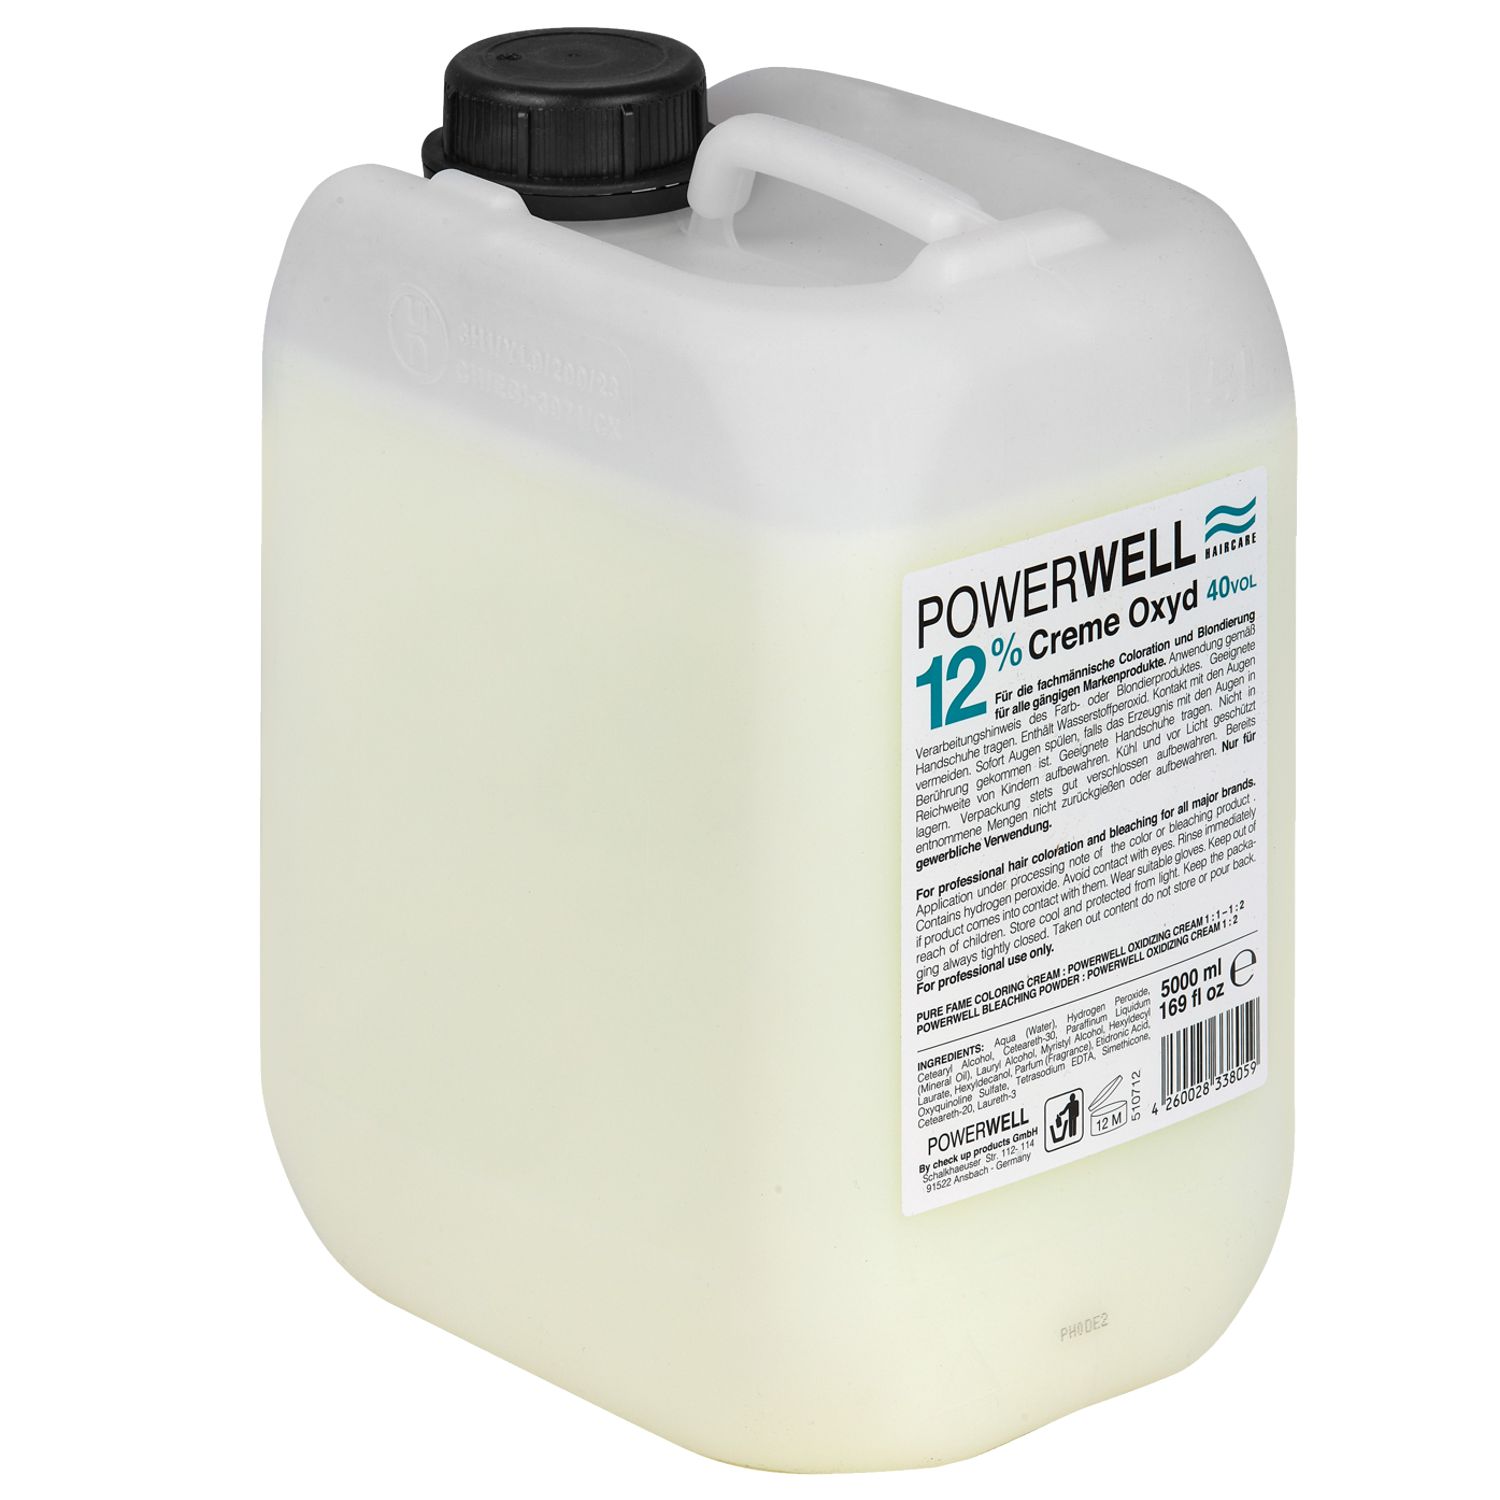 POWERWELL Creme-Oxyd 5 L